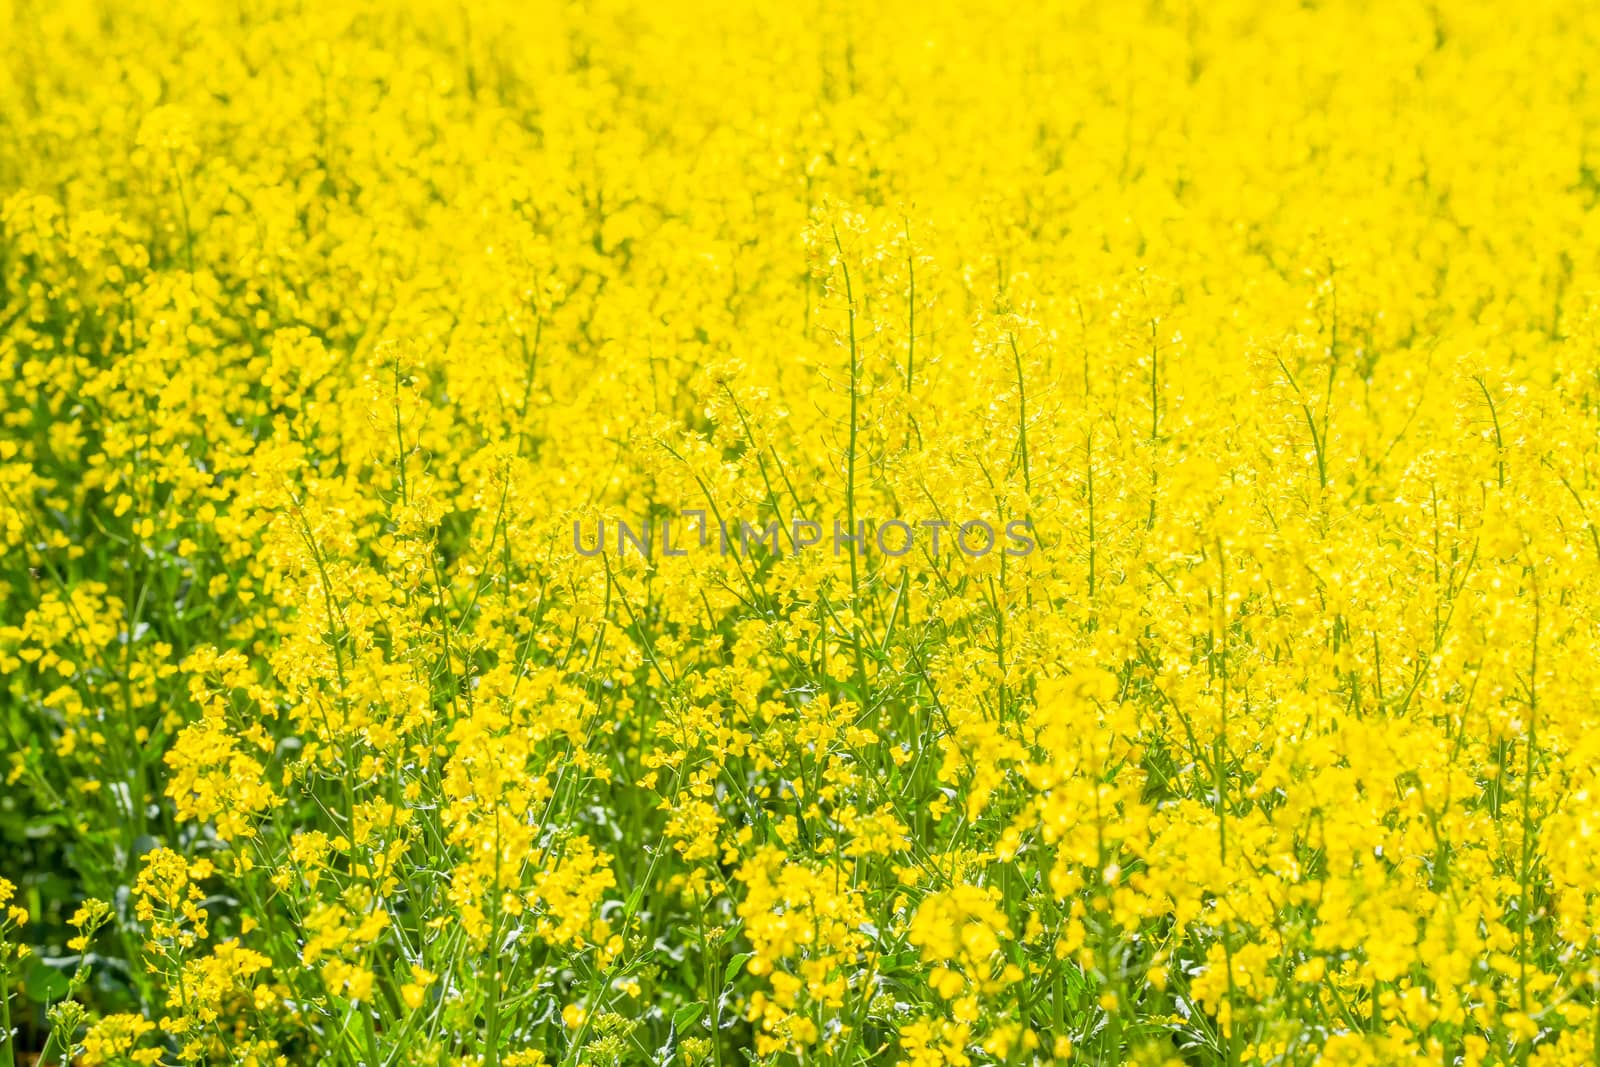 Yellow blooming rape field in spring by Fr@nk